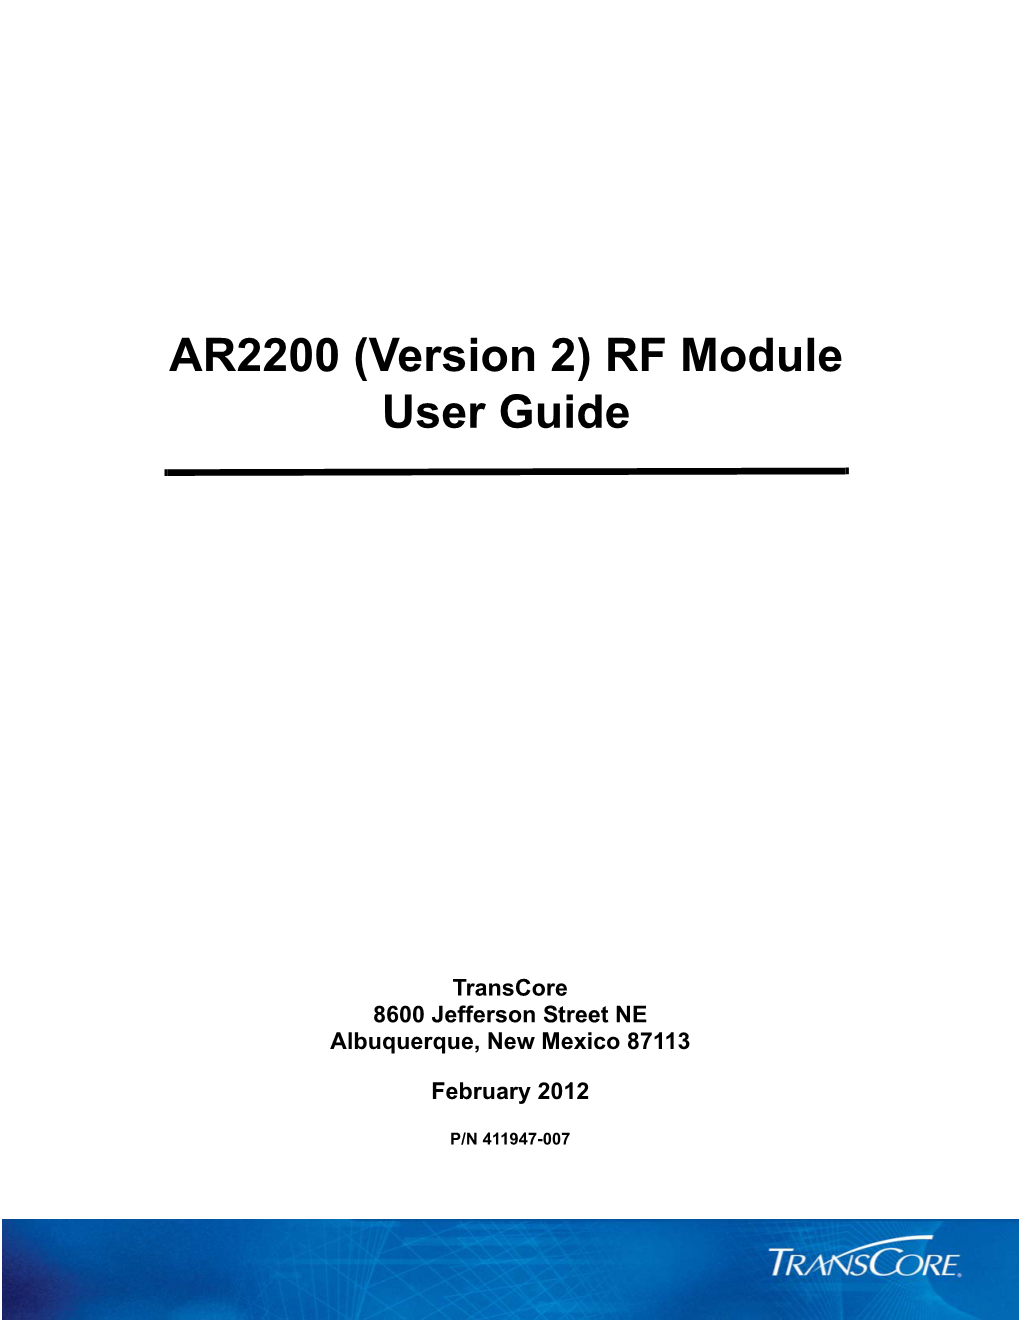 AR2200 (Version 2) RF Module User Guide